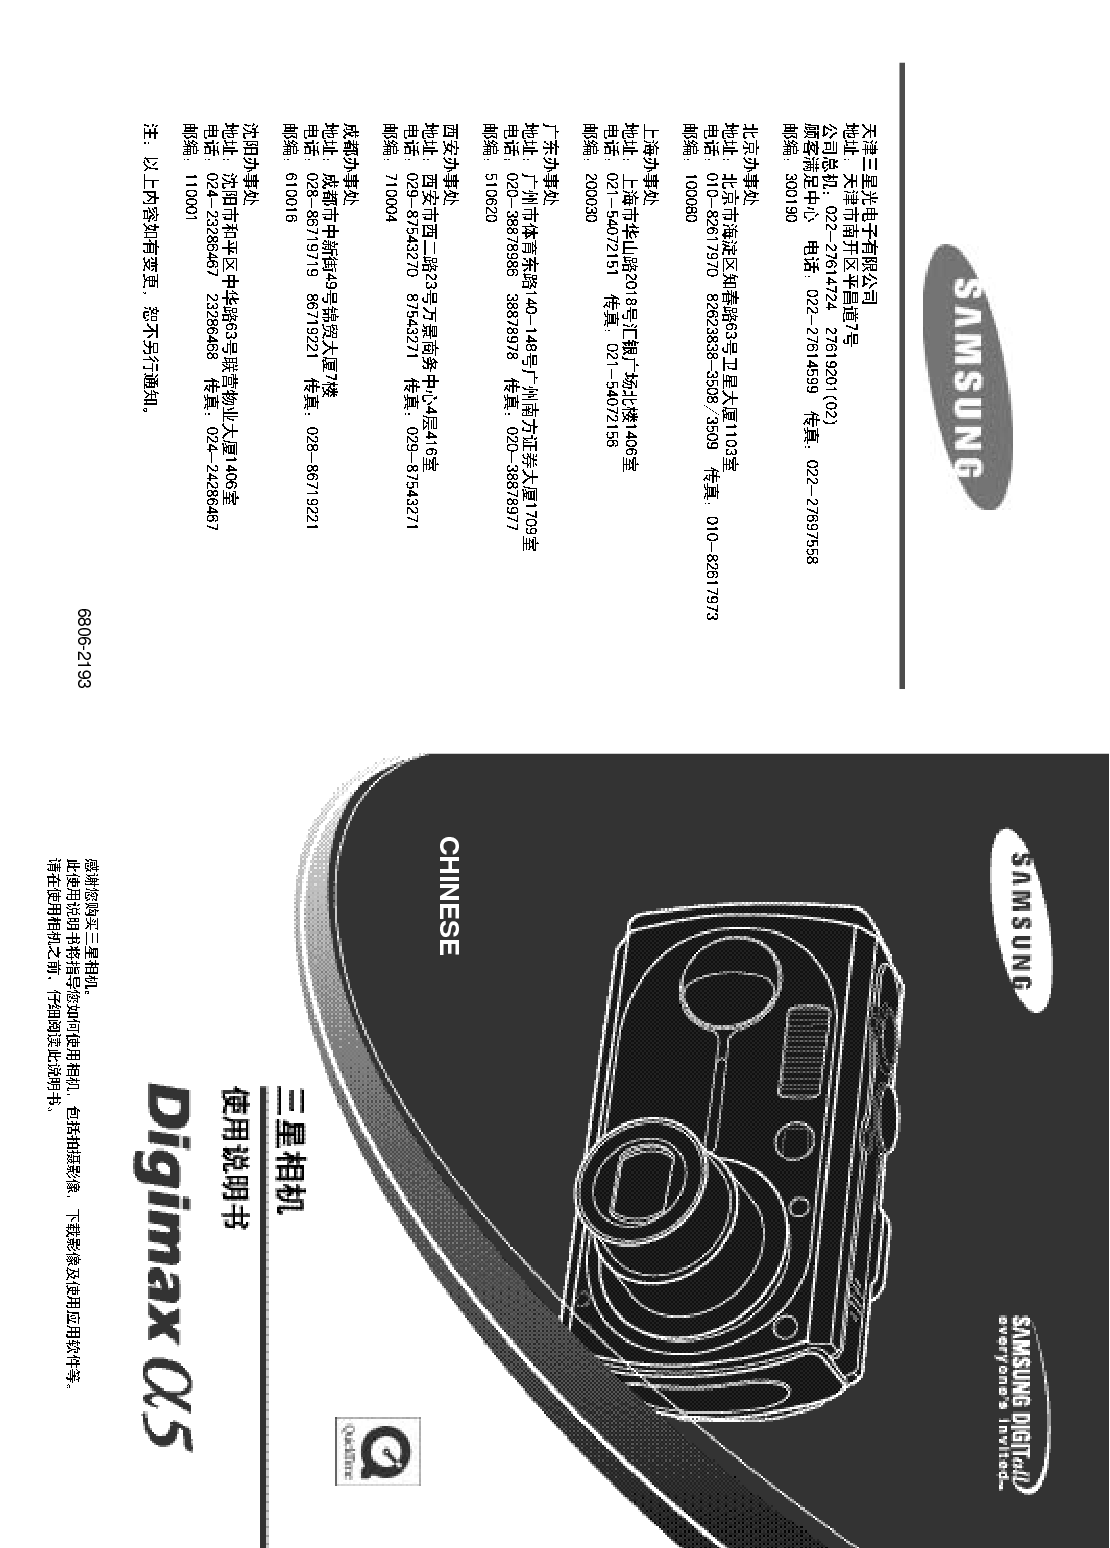 三星 Samsung Digimax ALPHA 5 用户手册 封面